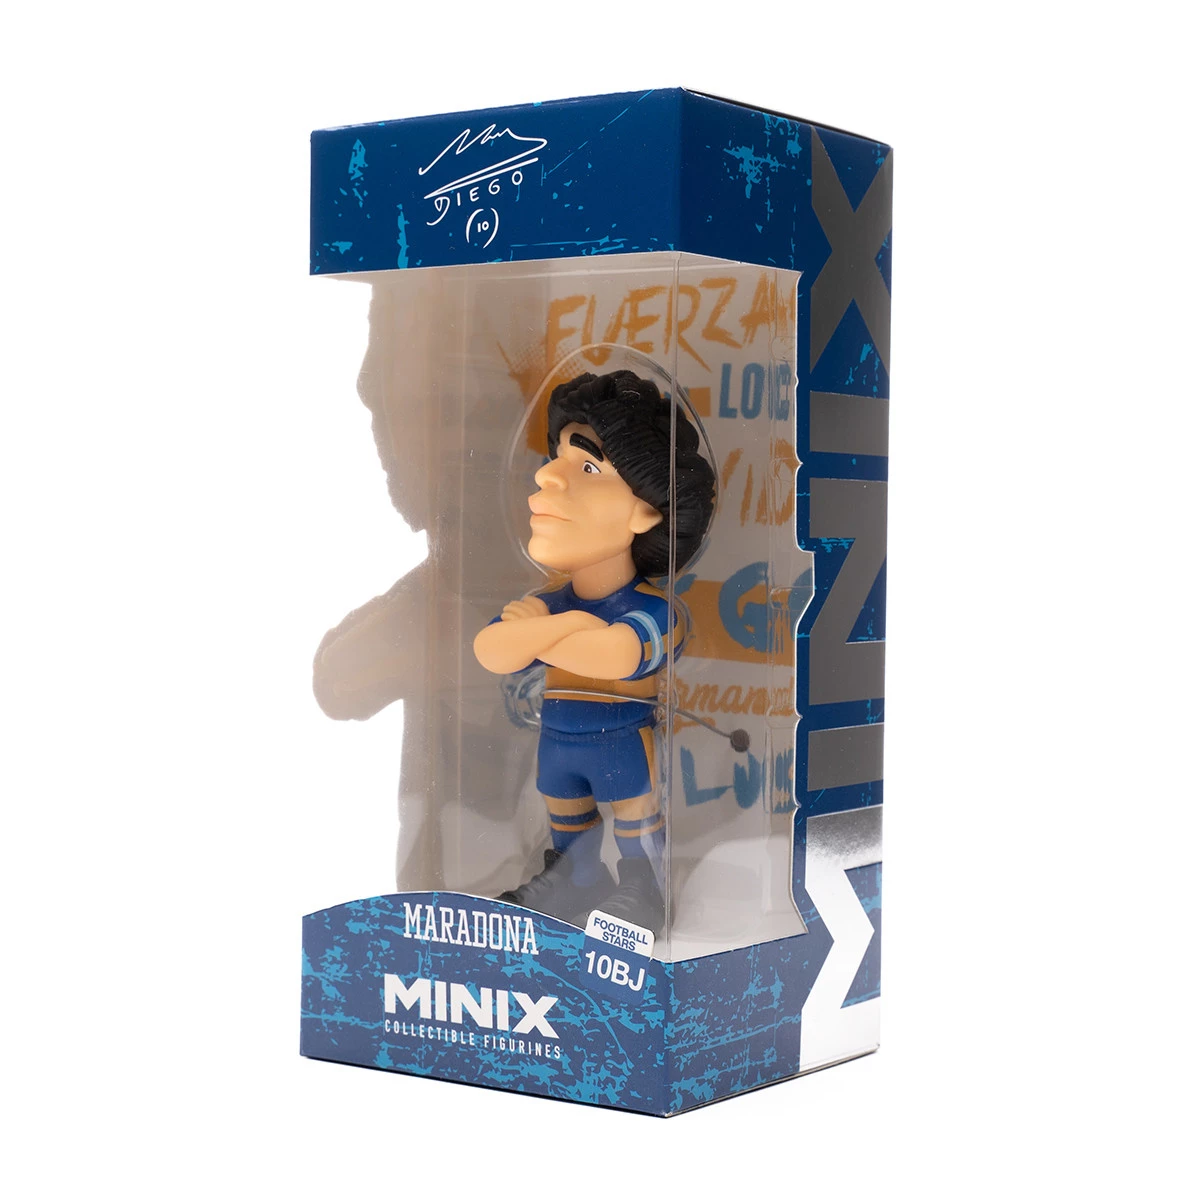 Maradona 12cm MINIX figurine